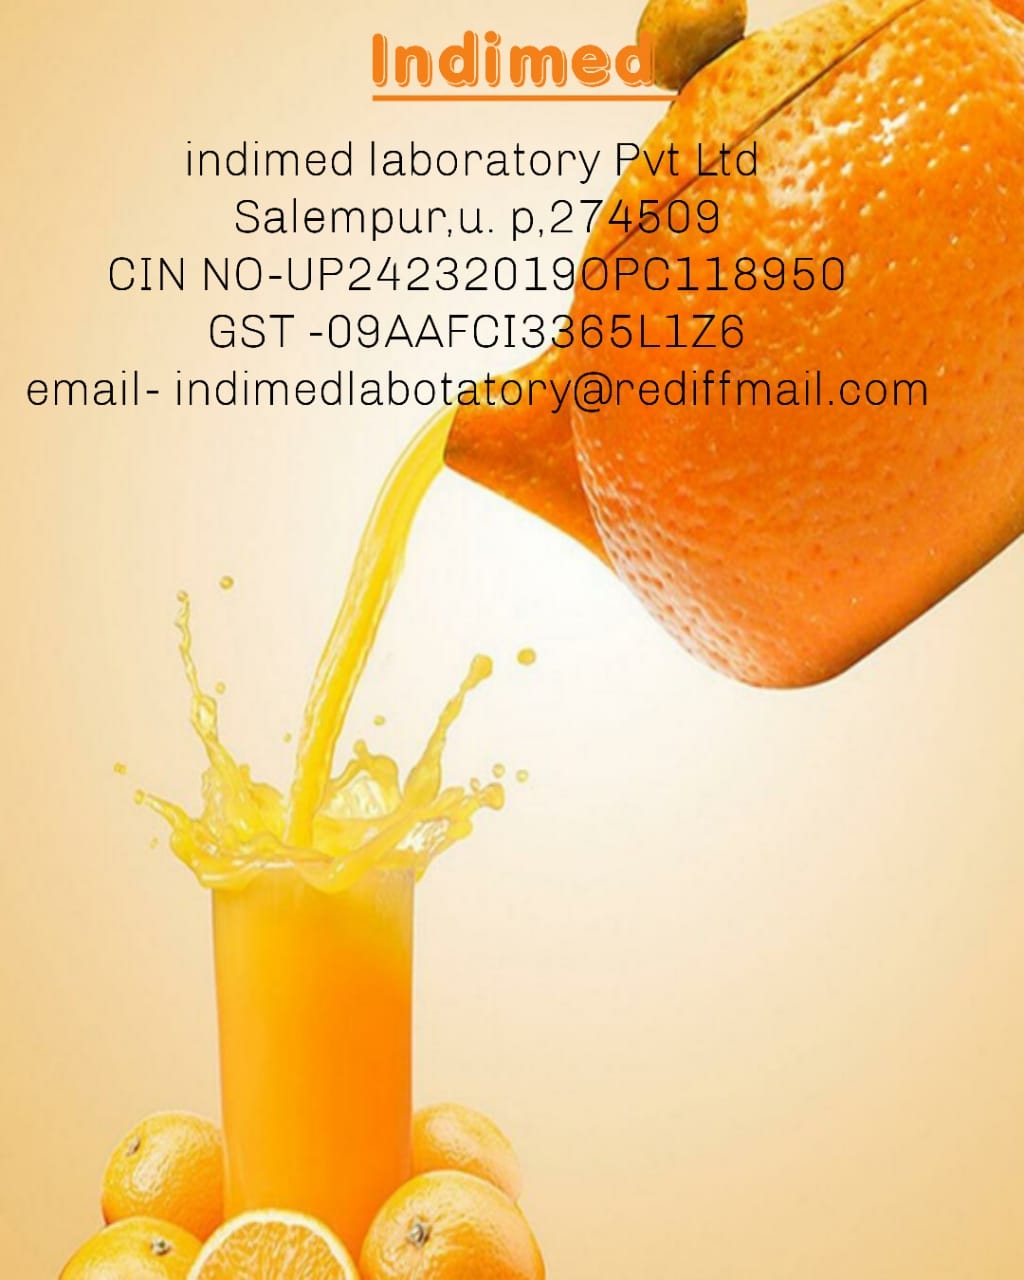 Indimed Laboratory Pvt Ltd